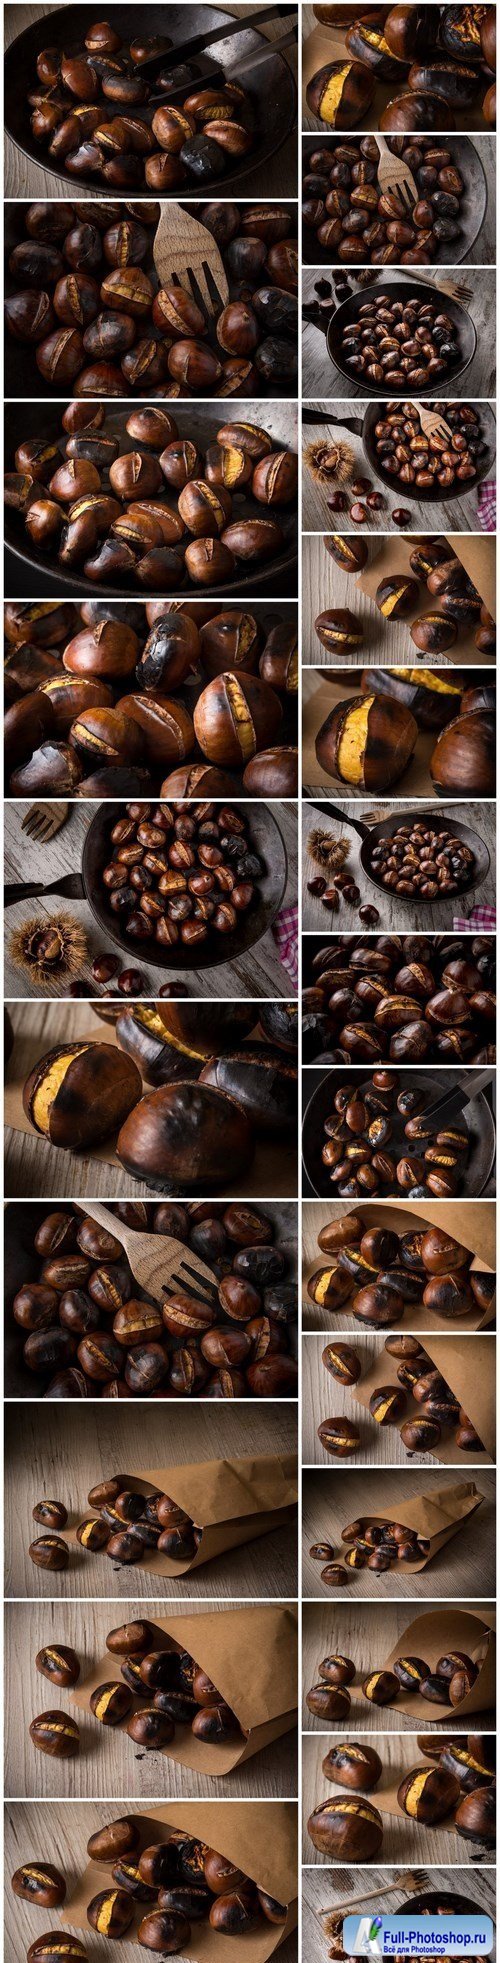 Pan-Roasted Chestnuts - 25xUHQ JPEG